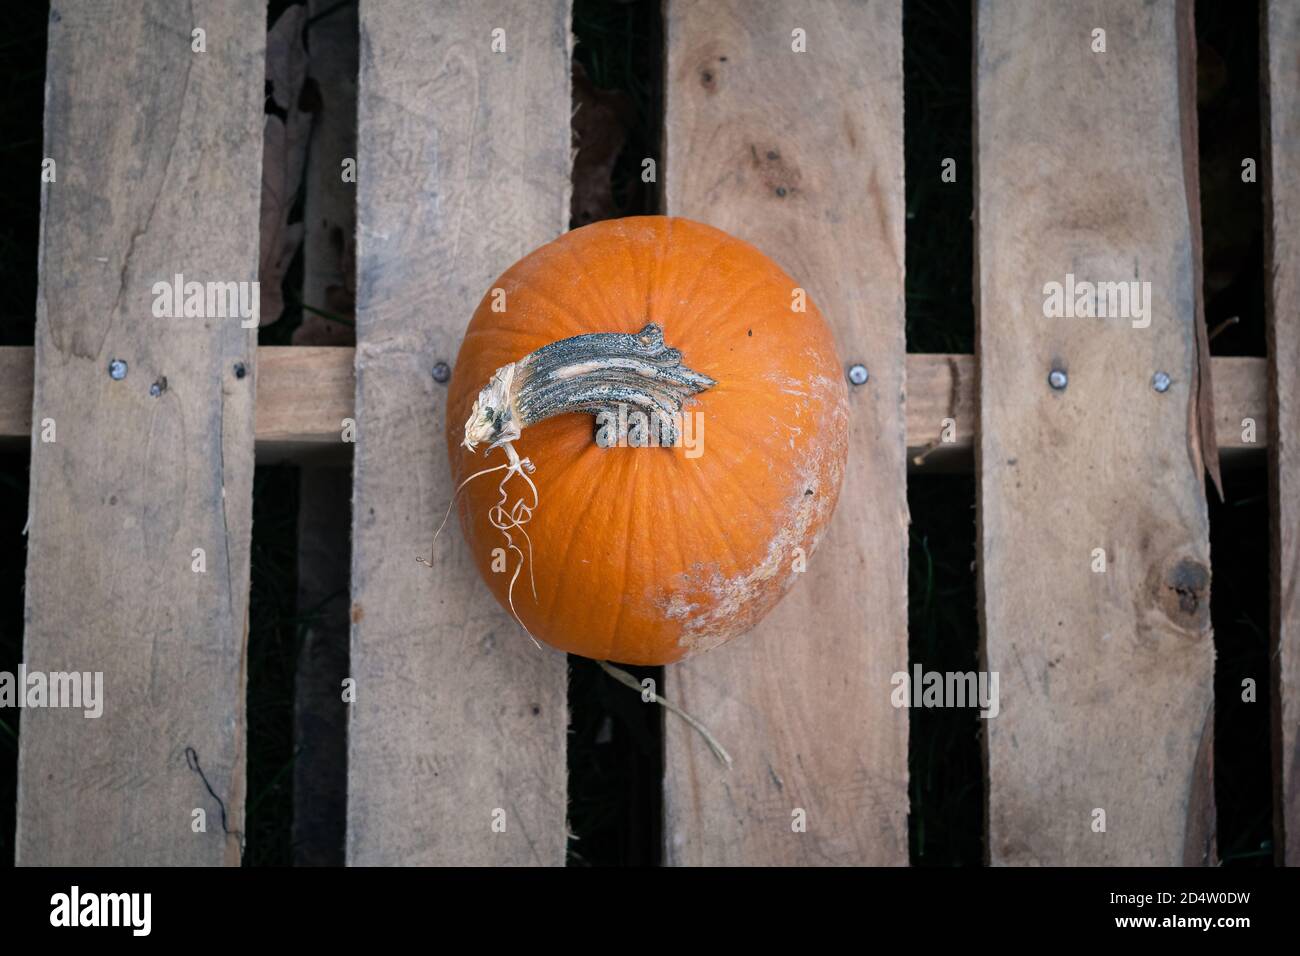 A single pumpkin on a wooden pallet. Stock Photo